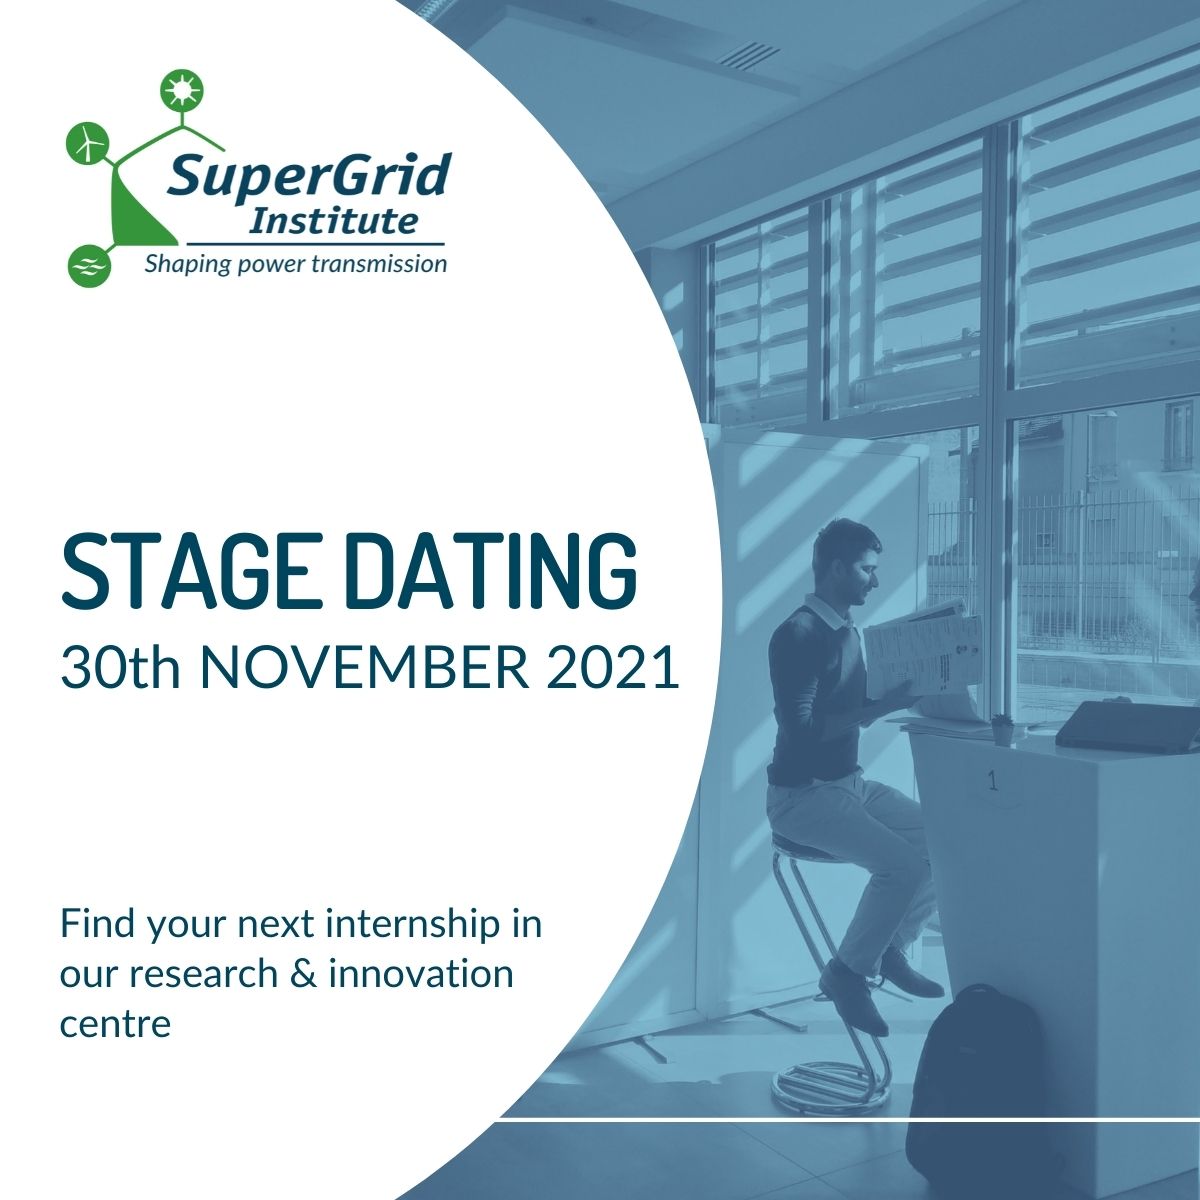 SuperGrid Institute's 2021 stage dating